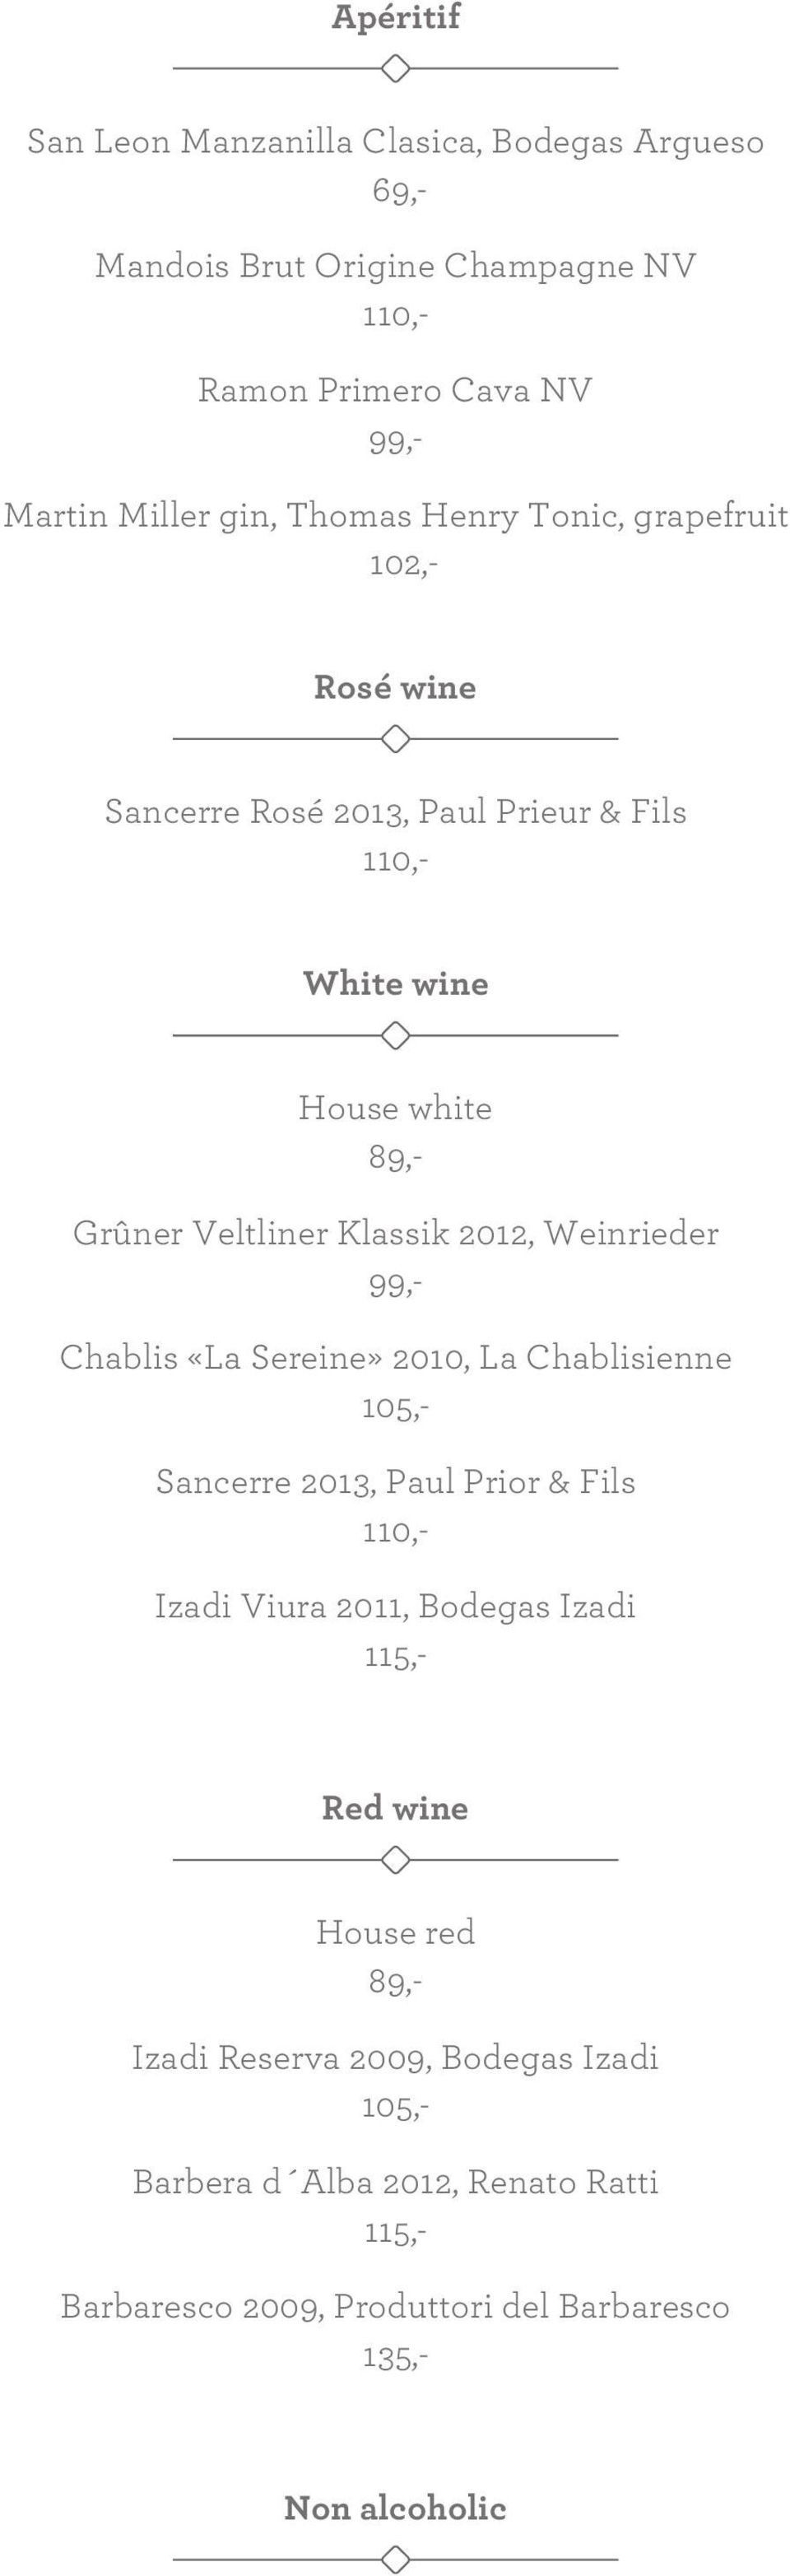 Weinrieder 99,- Chablis «La Sereine» 2010, La Chablisienne 105,- Sancerre 2013, Paul Prior & Fils 110,- Izadi Viura 2011, Bodegas Izadi 115,- Red wine